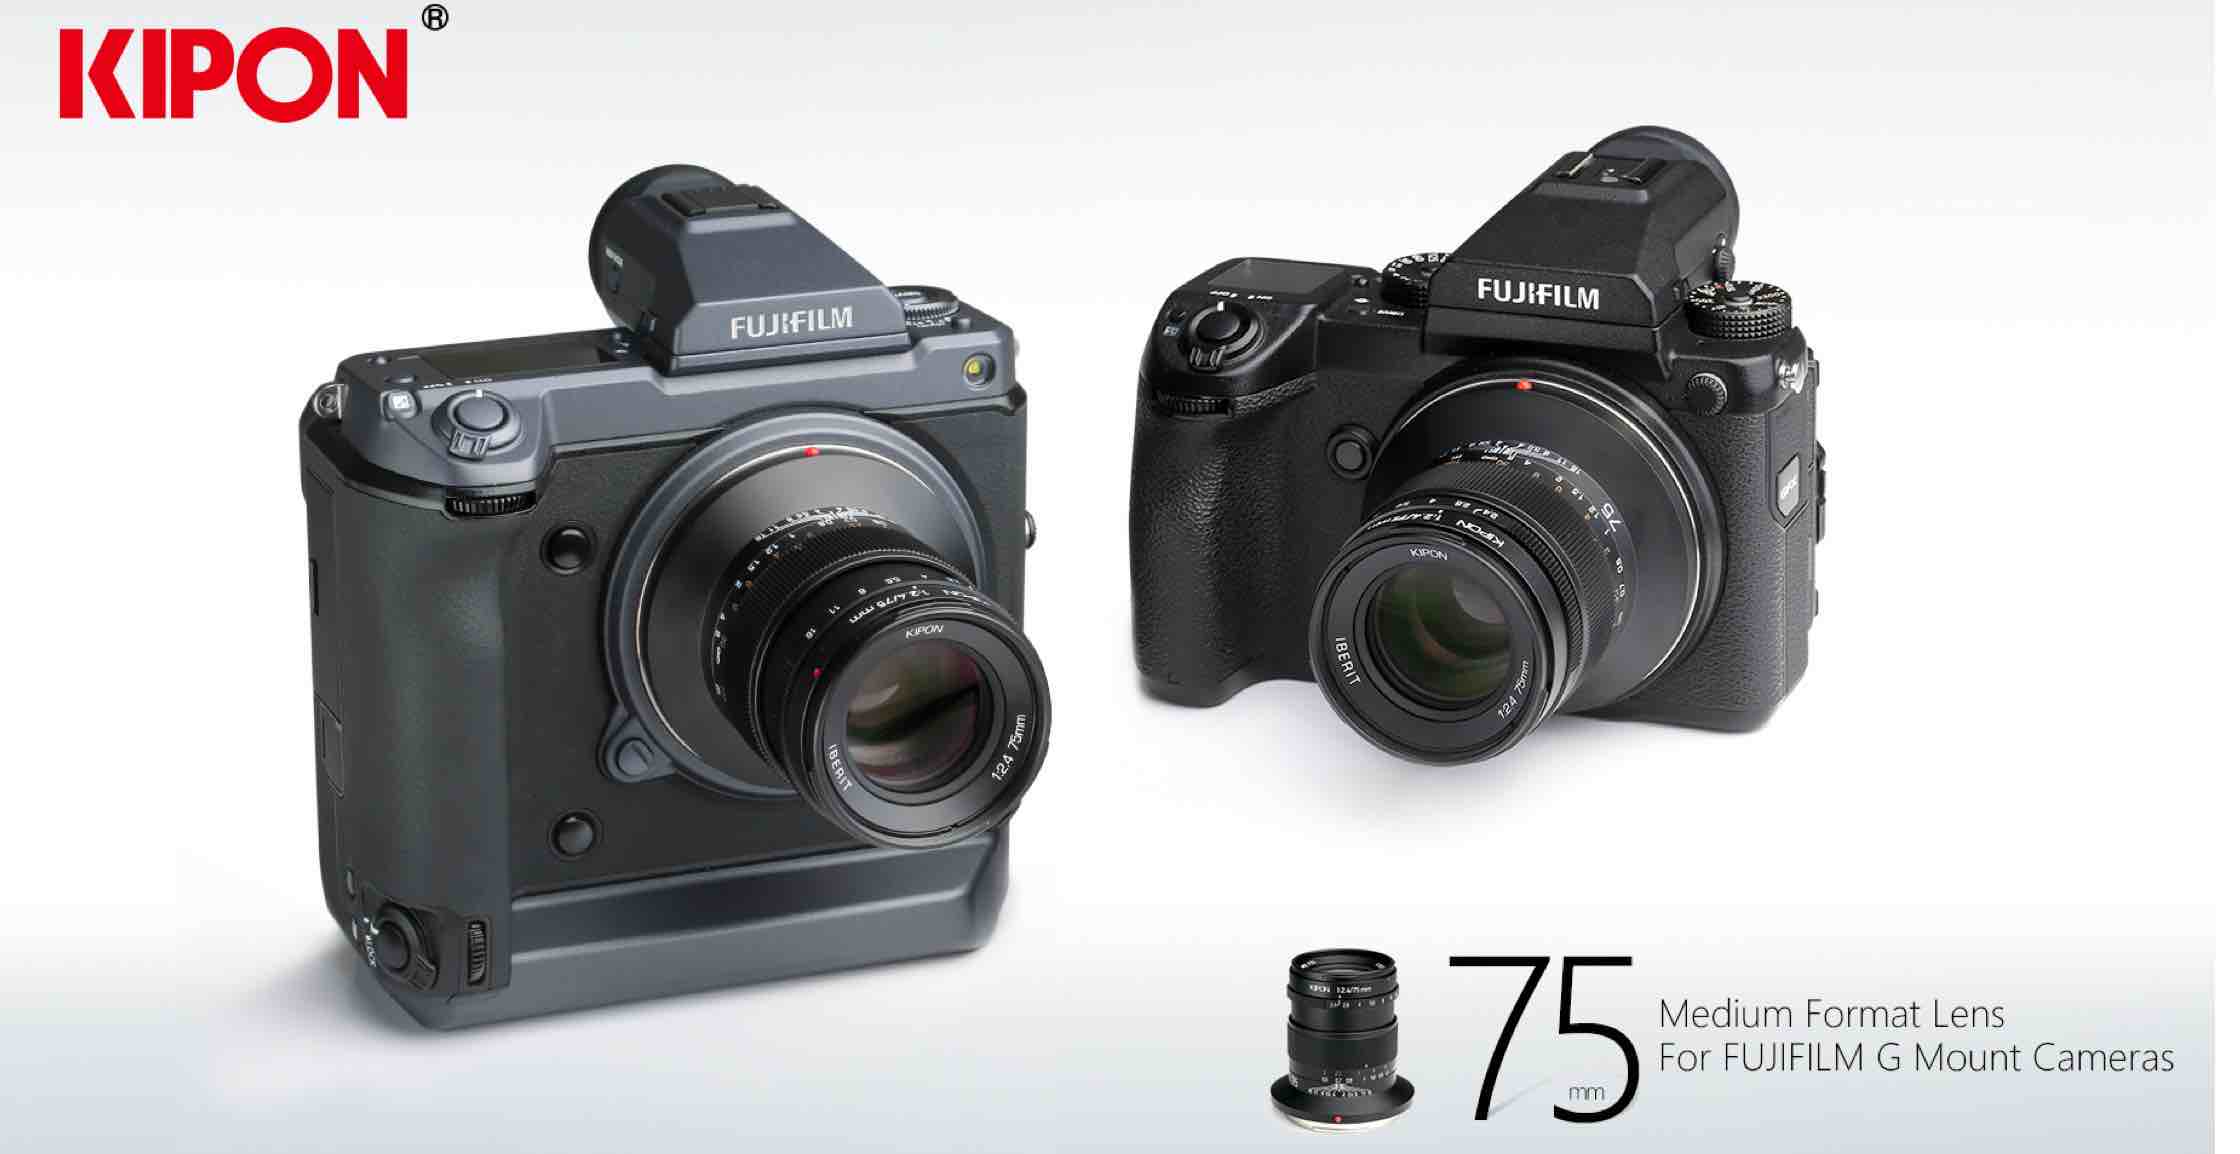 KIPON IBERIT 75mm f/2.4 Lens for Fujifilm GFX Now Shipping - Fuji